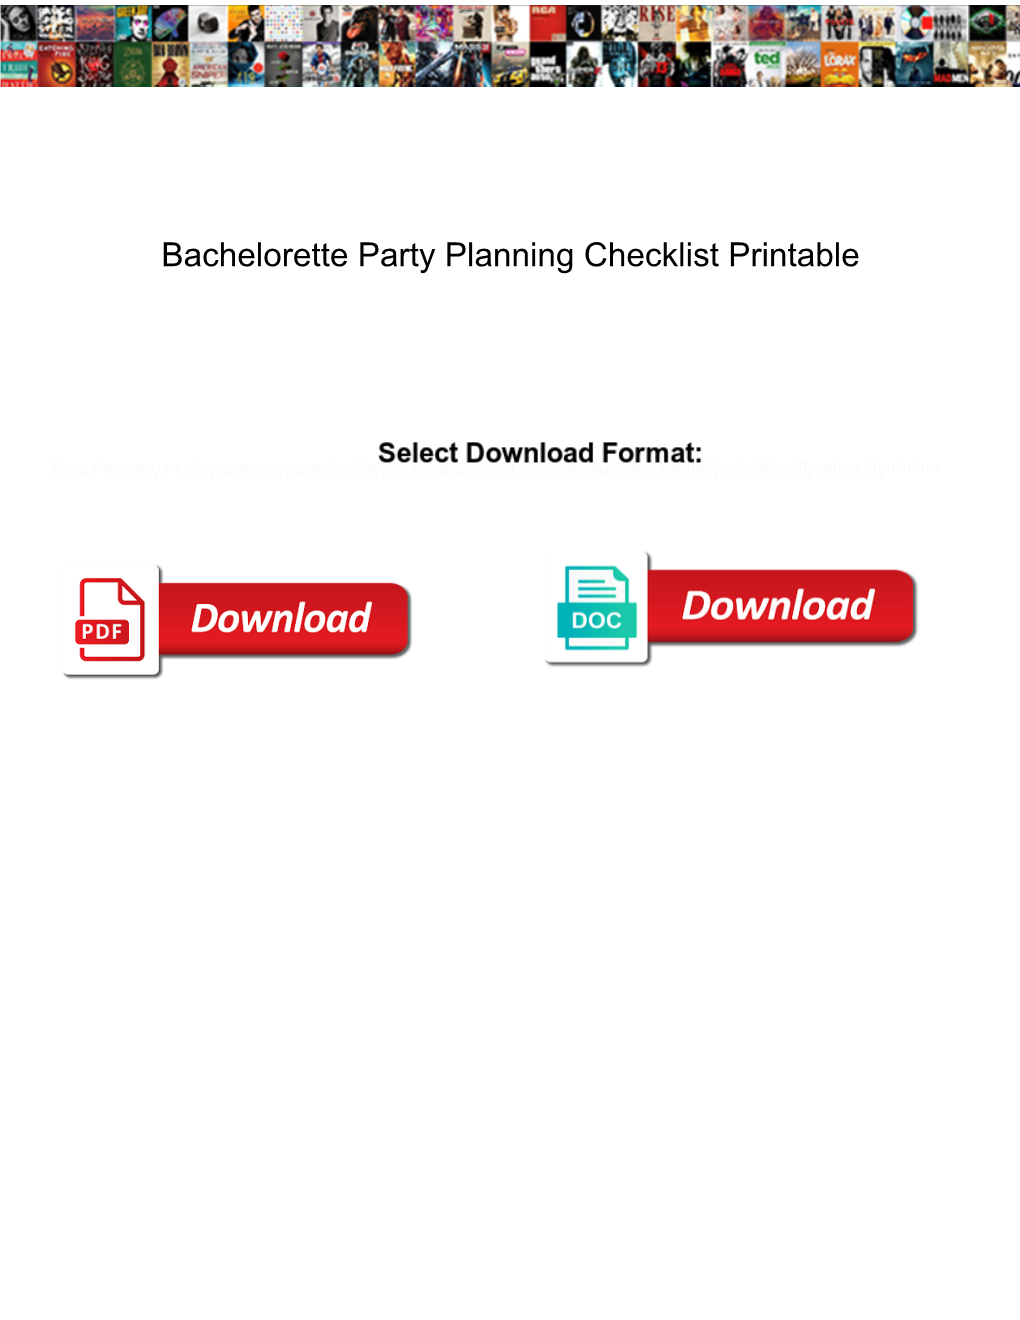 Bachelorette Party Planning Checklist Printable